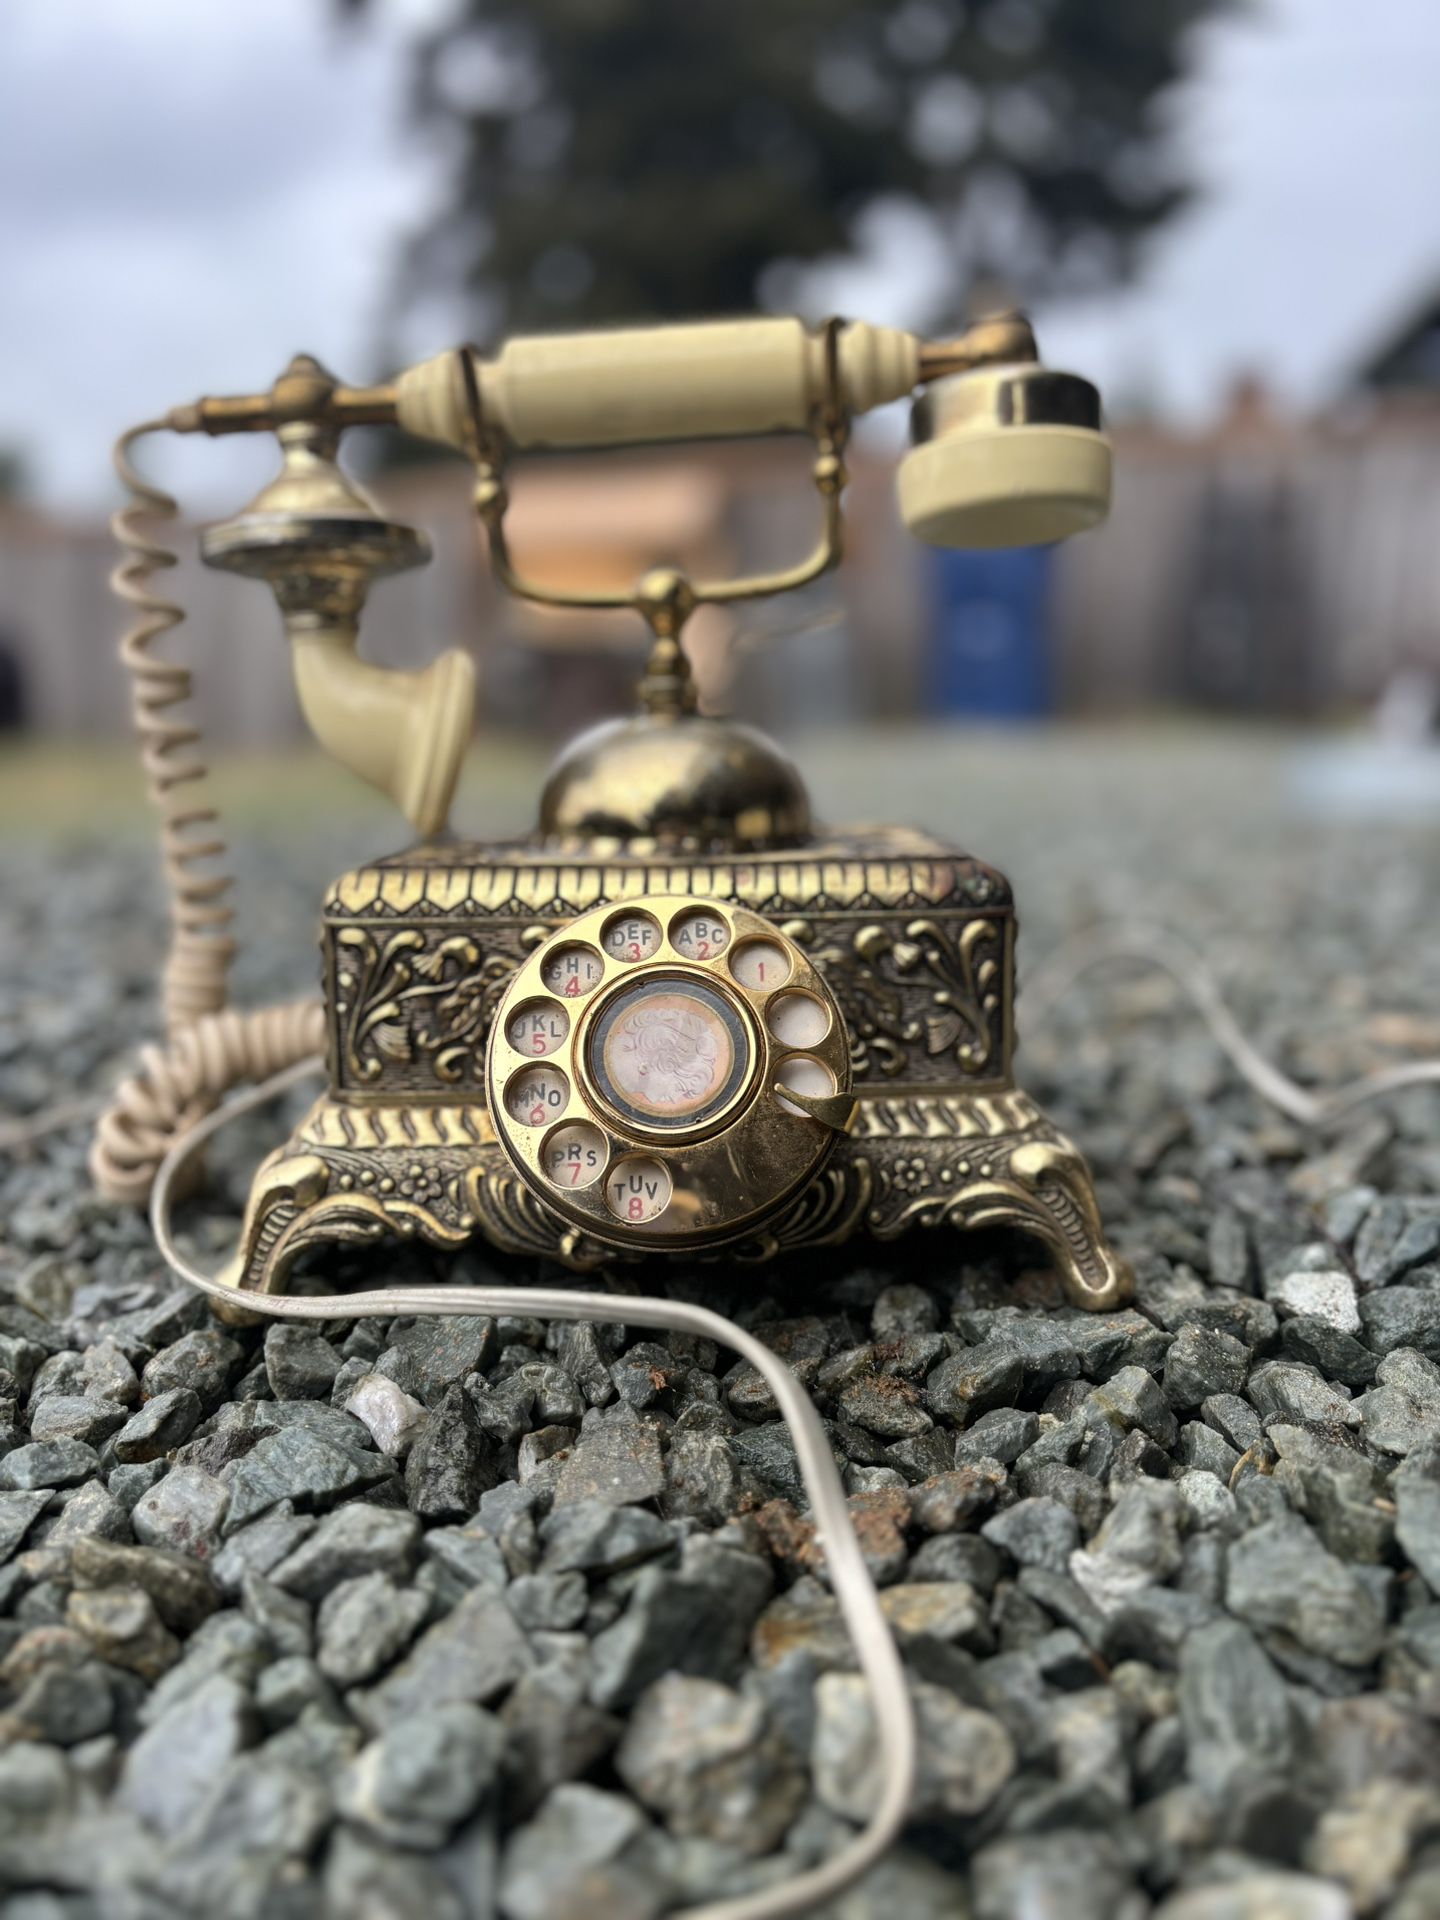 Vintage Brass Rotary Phone  - Works!